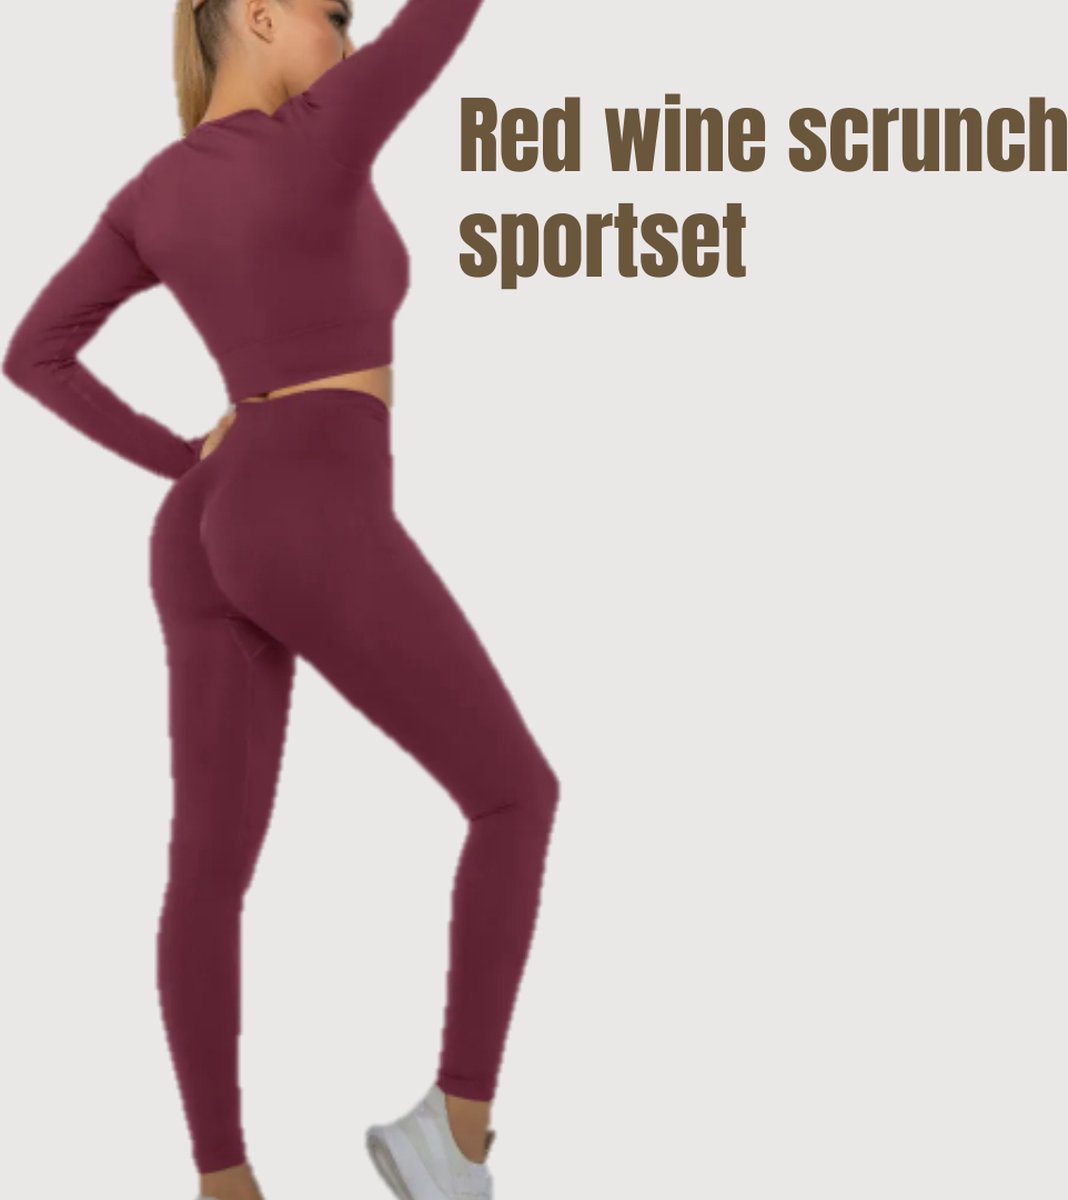 Sportchic - Sportoutfit - Sportkleding Set Dames - Squat proof - Fitness legging + Sport shirt - Yoga Kleding - Sport Top - Sport Shirt dames - Fitness Legging - Fitness Kleding Set Voor Dames - Bordeaux Rood - S - Sportchic